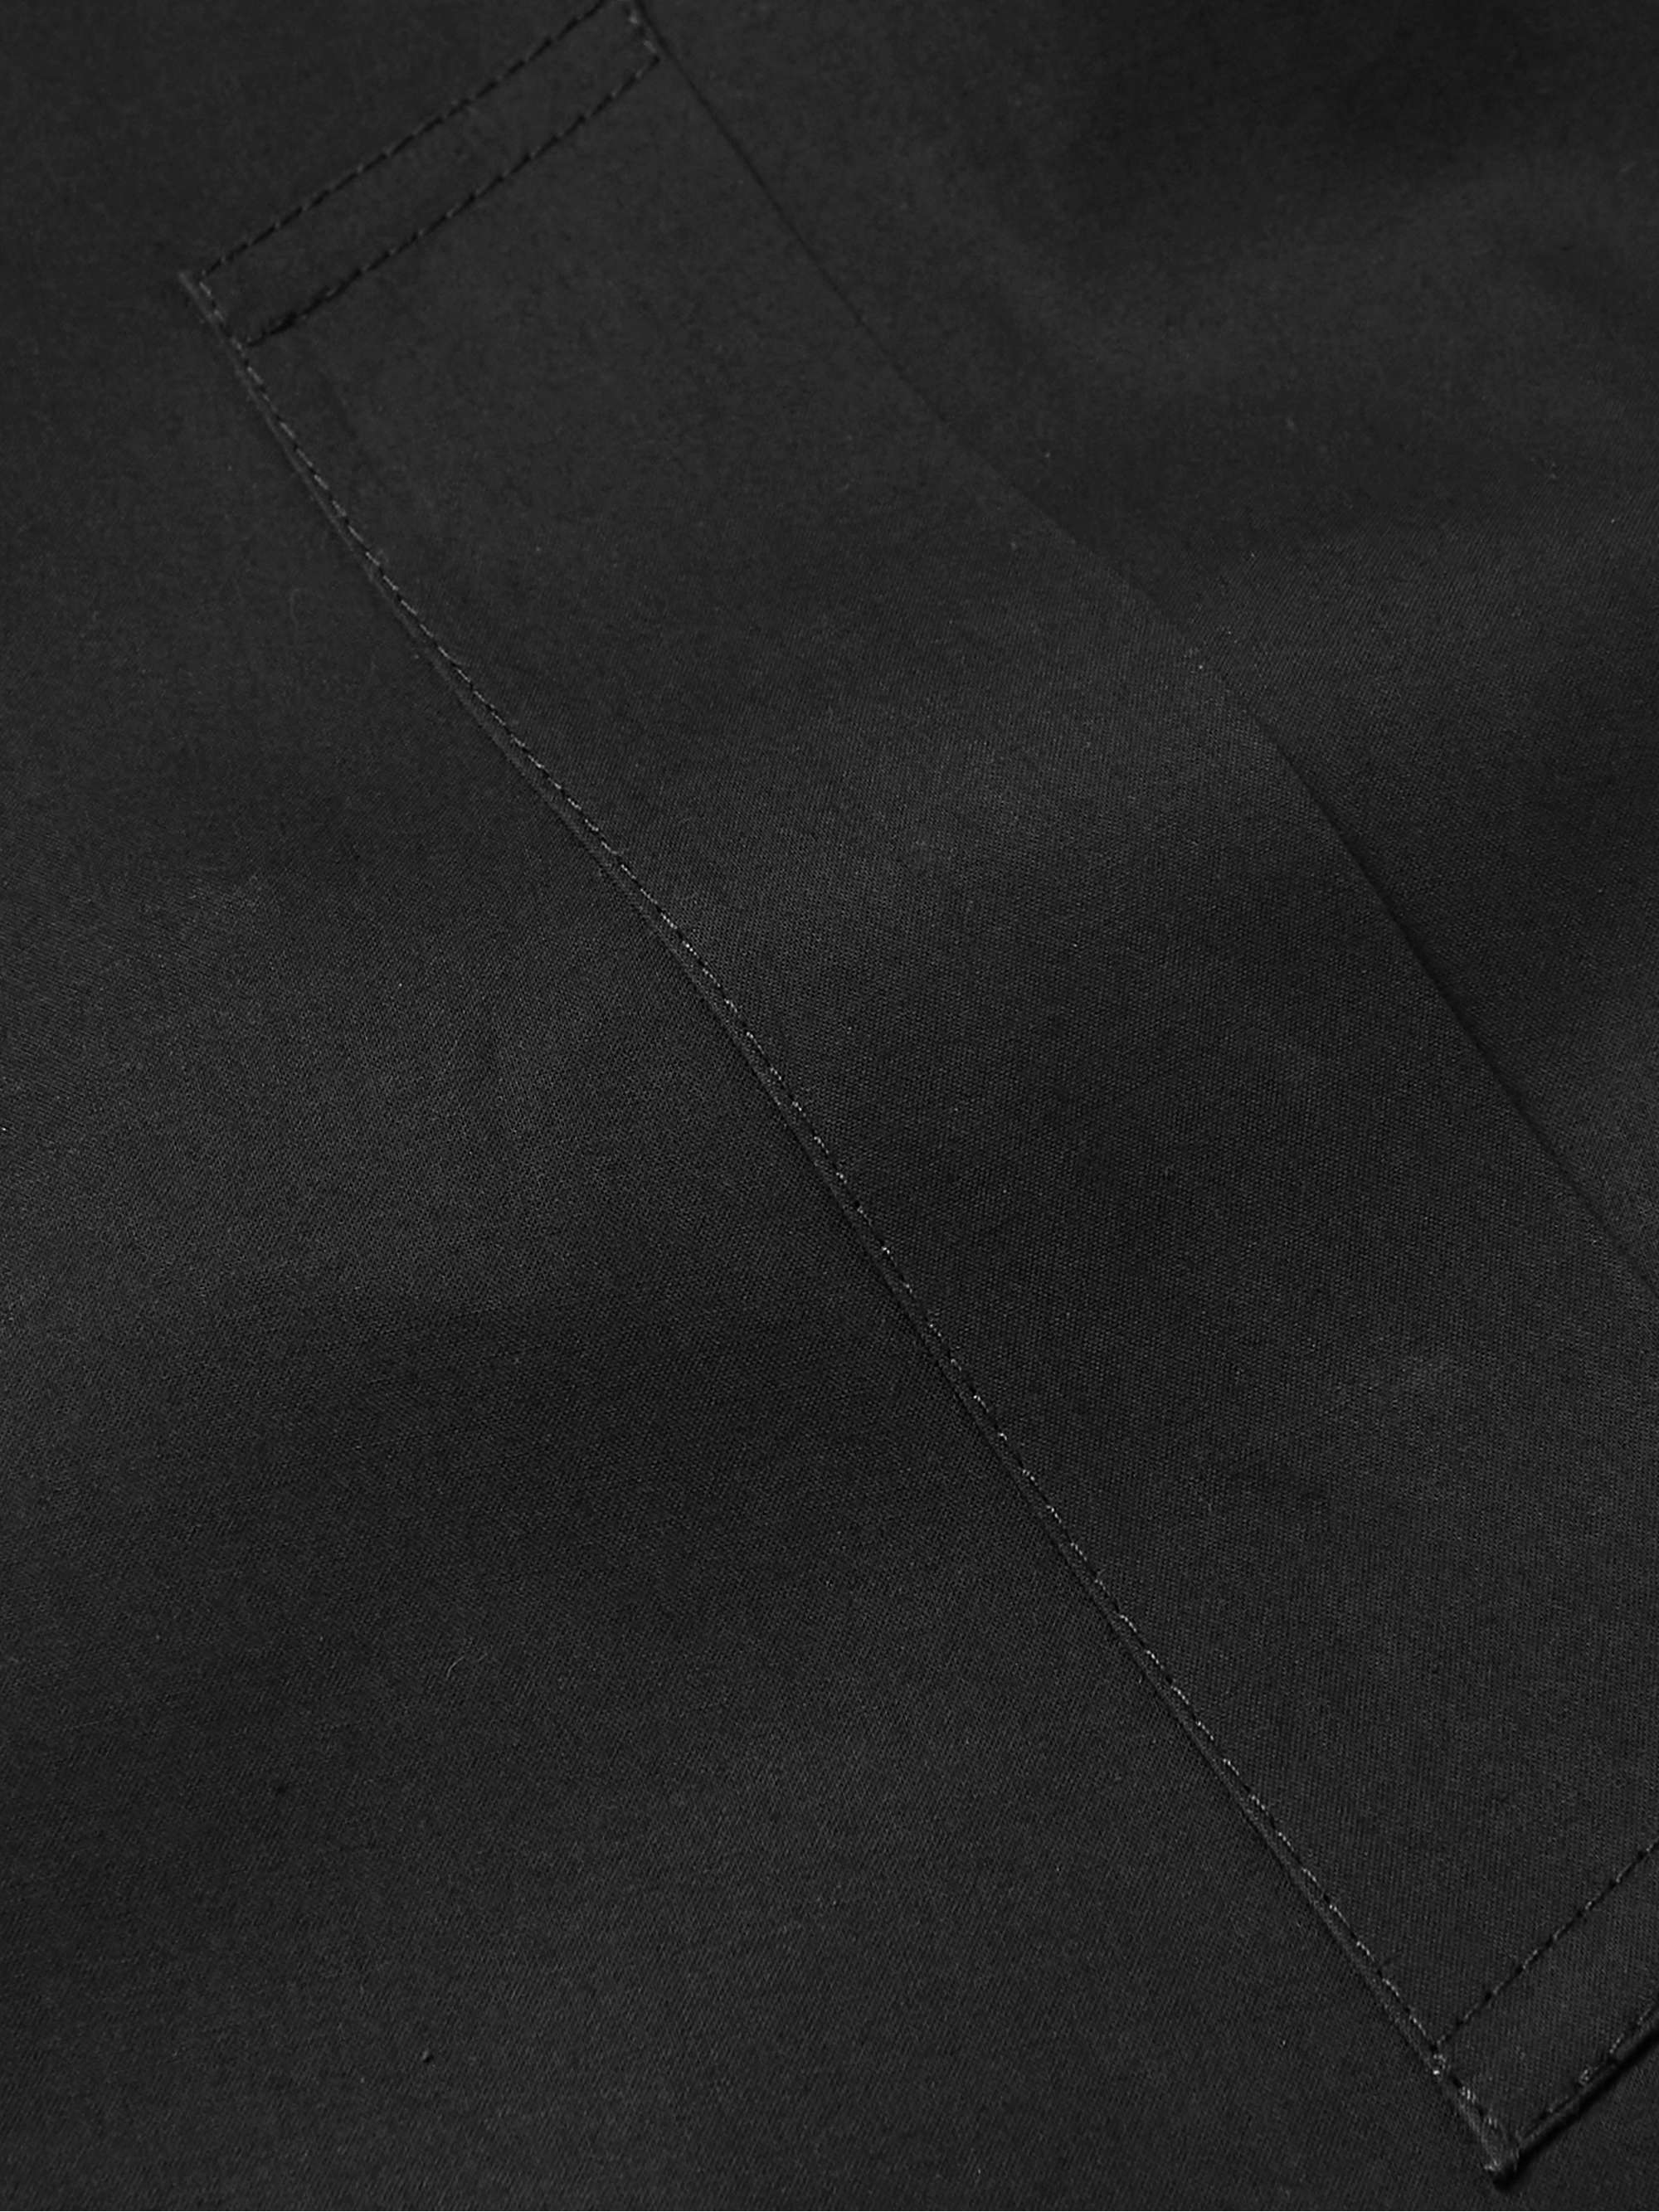 MACKINTOSH Oxford Bonded Cotton Trench Coat